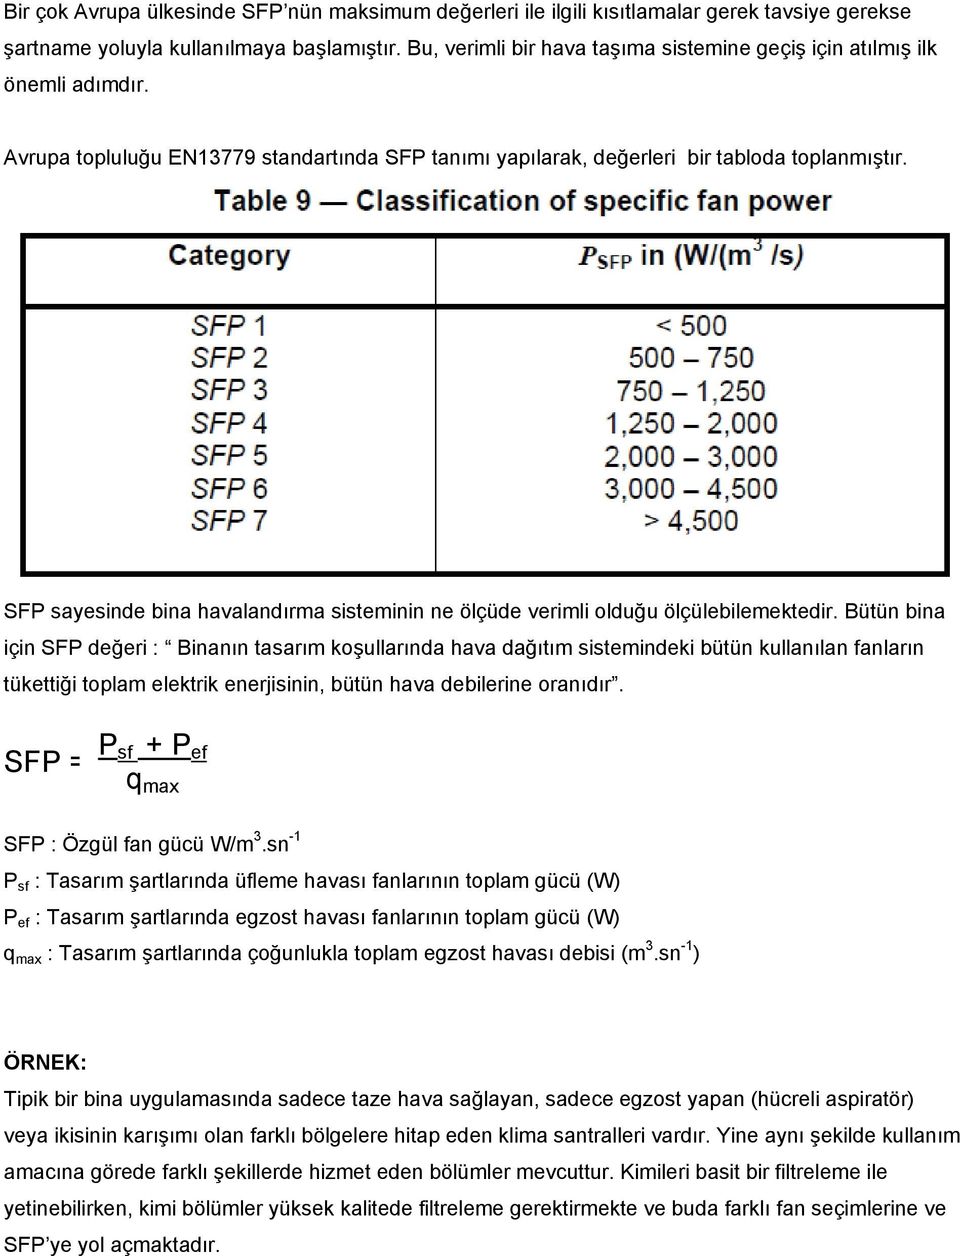 SPECIFIC FAN POWER (SFP) NEDİR? - PDF Ücretsiz indirin